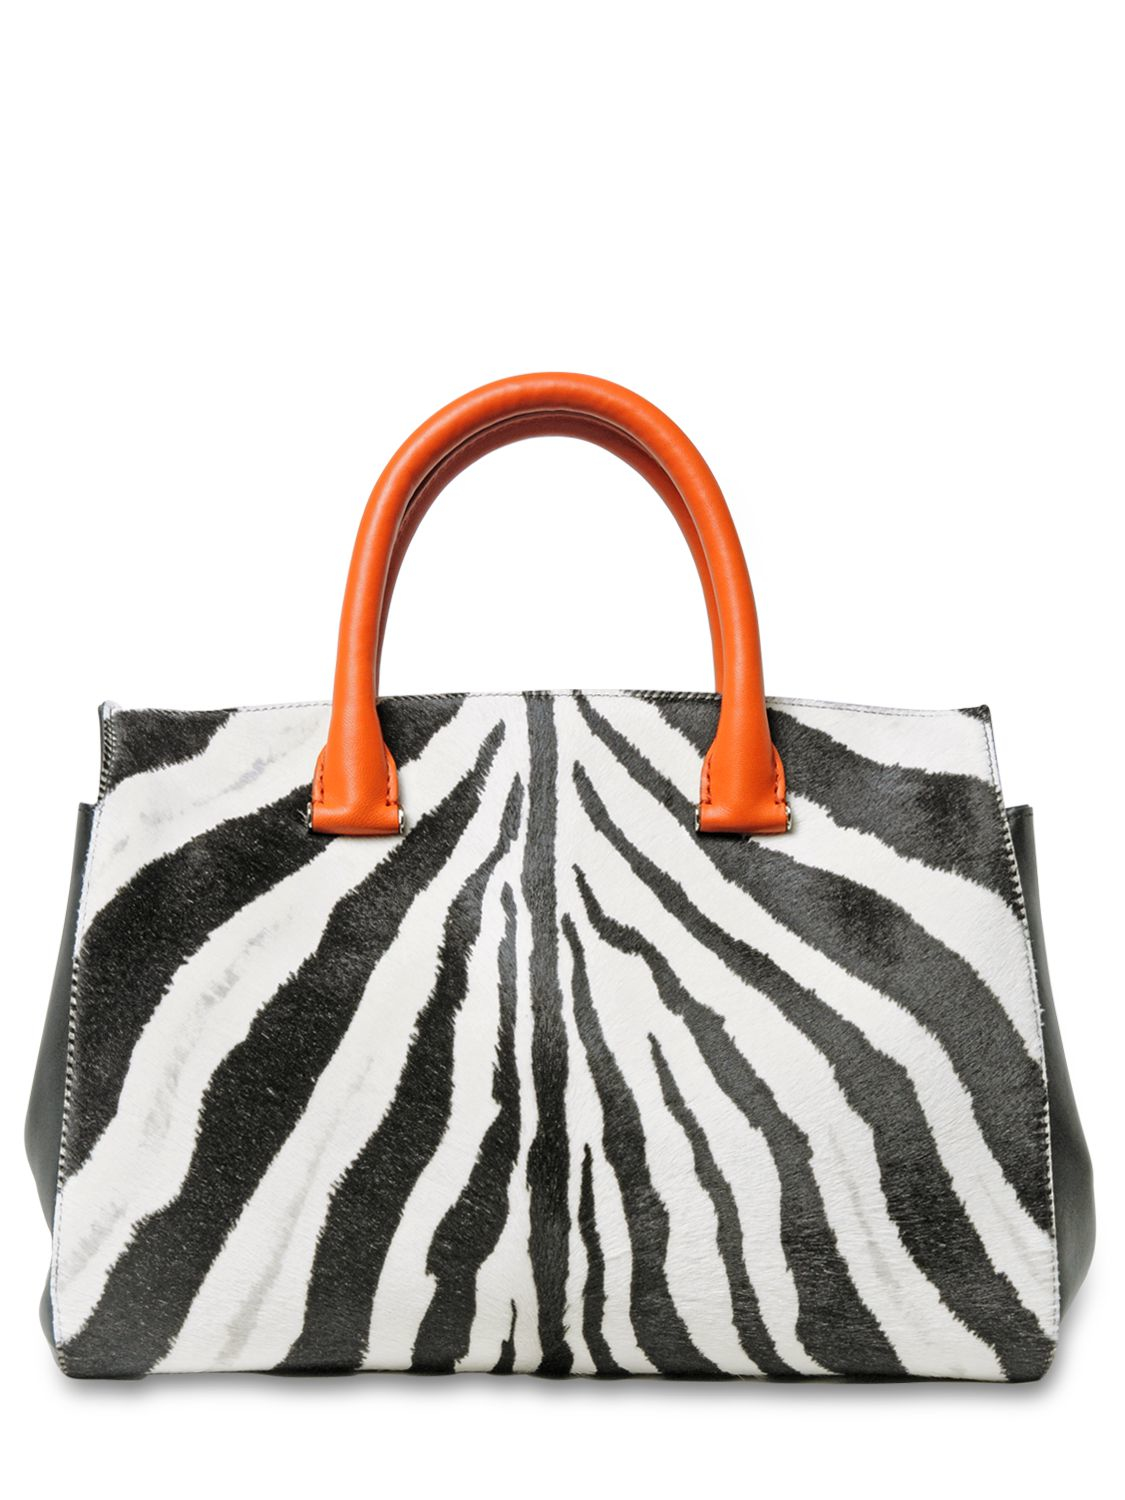 Max Mara Leather Zebra Printed Ponyskin Top Handle Bag in Black/White  (Black) - Lyst